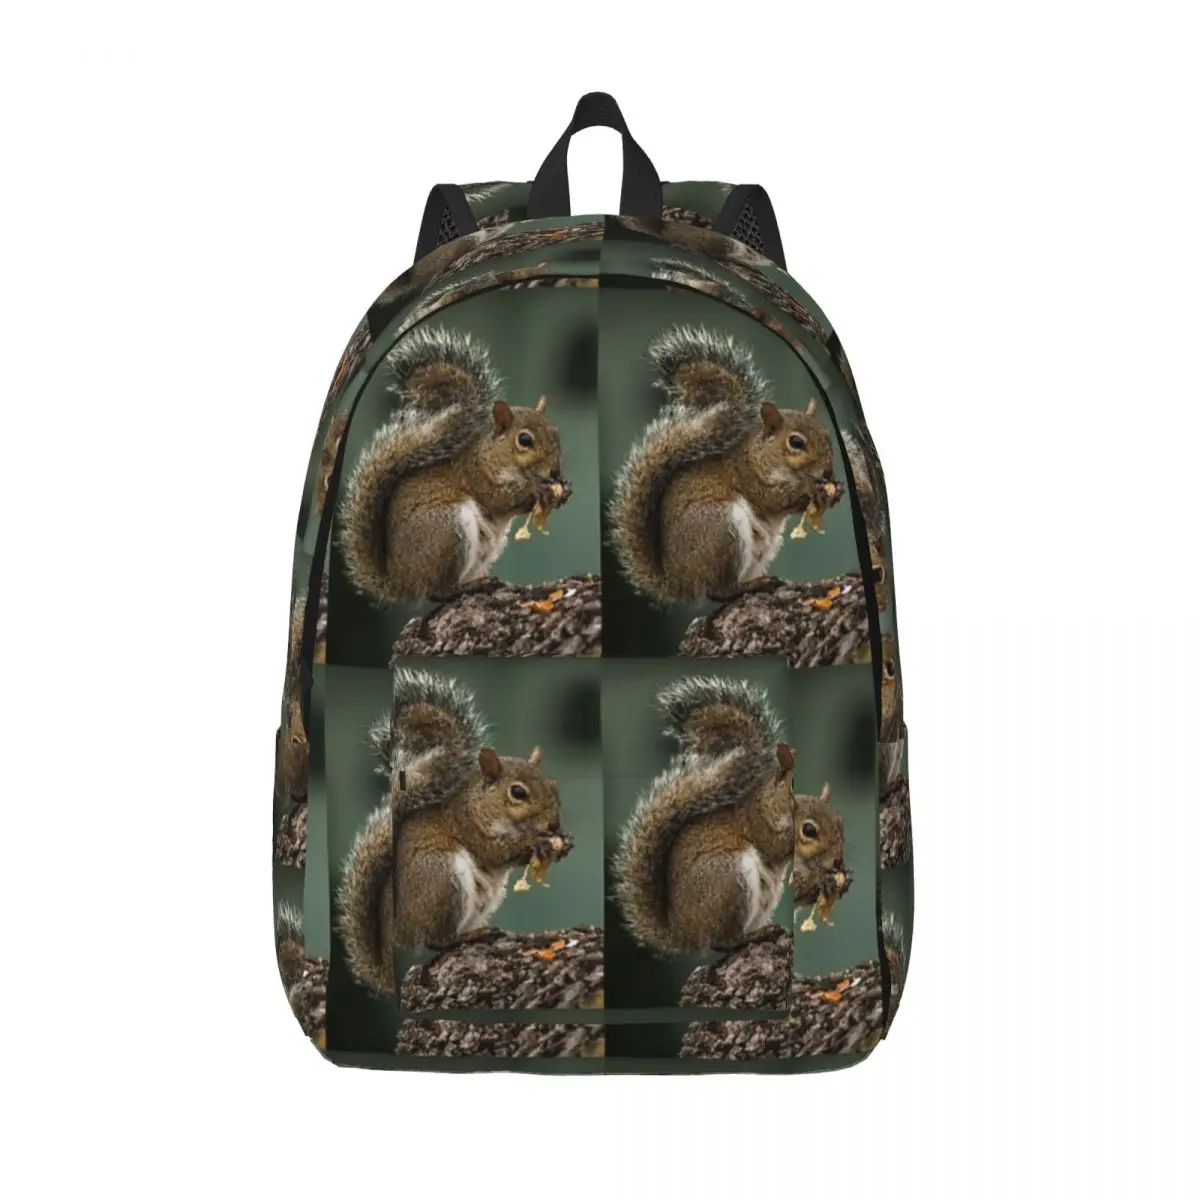 

Grey Squirrel Eating A Nut Woman Small Backpacks Bookbag Fashion Shoulder Bag Portability Travel Rucksack Children School Bags